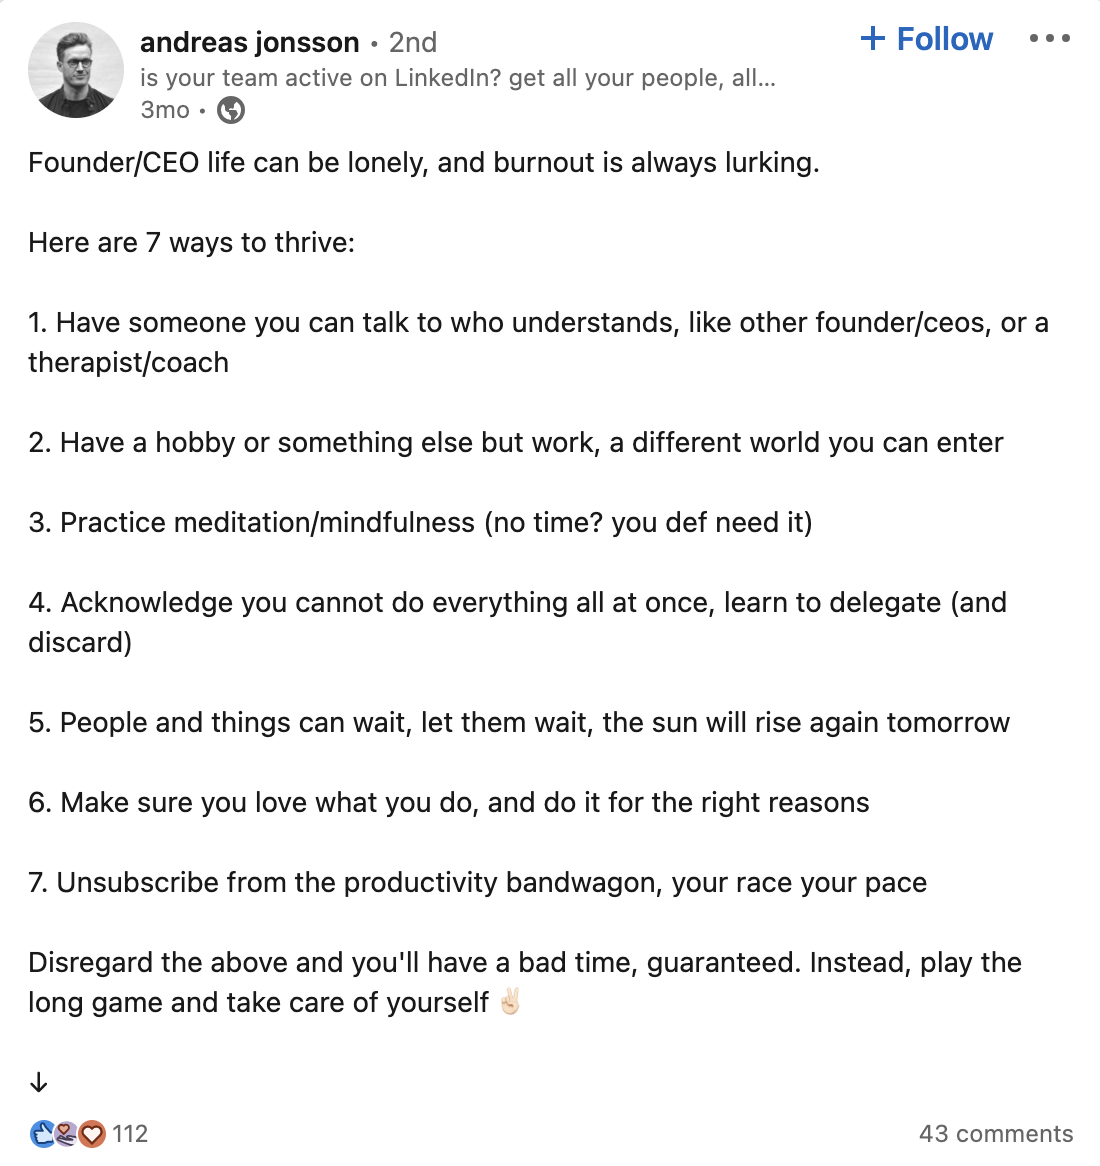 Andreas Jonsson' LinkedIn post sharing tips on how to avoid burnout